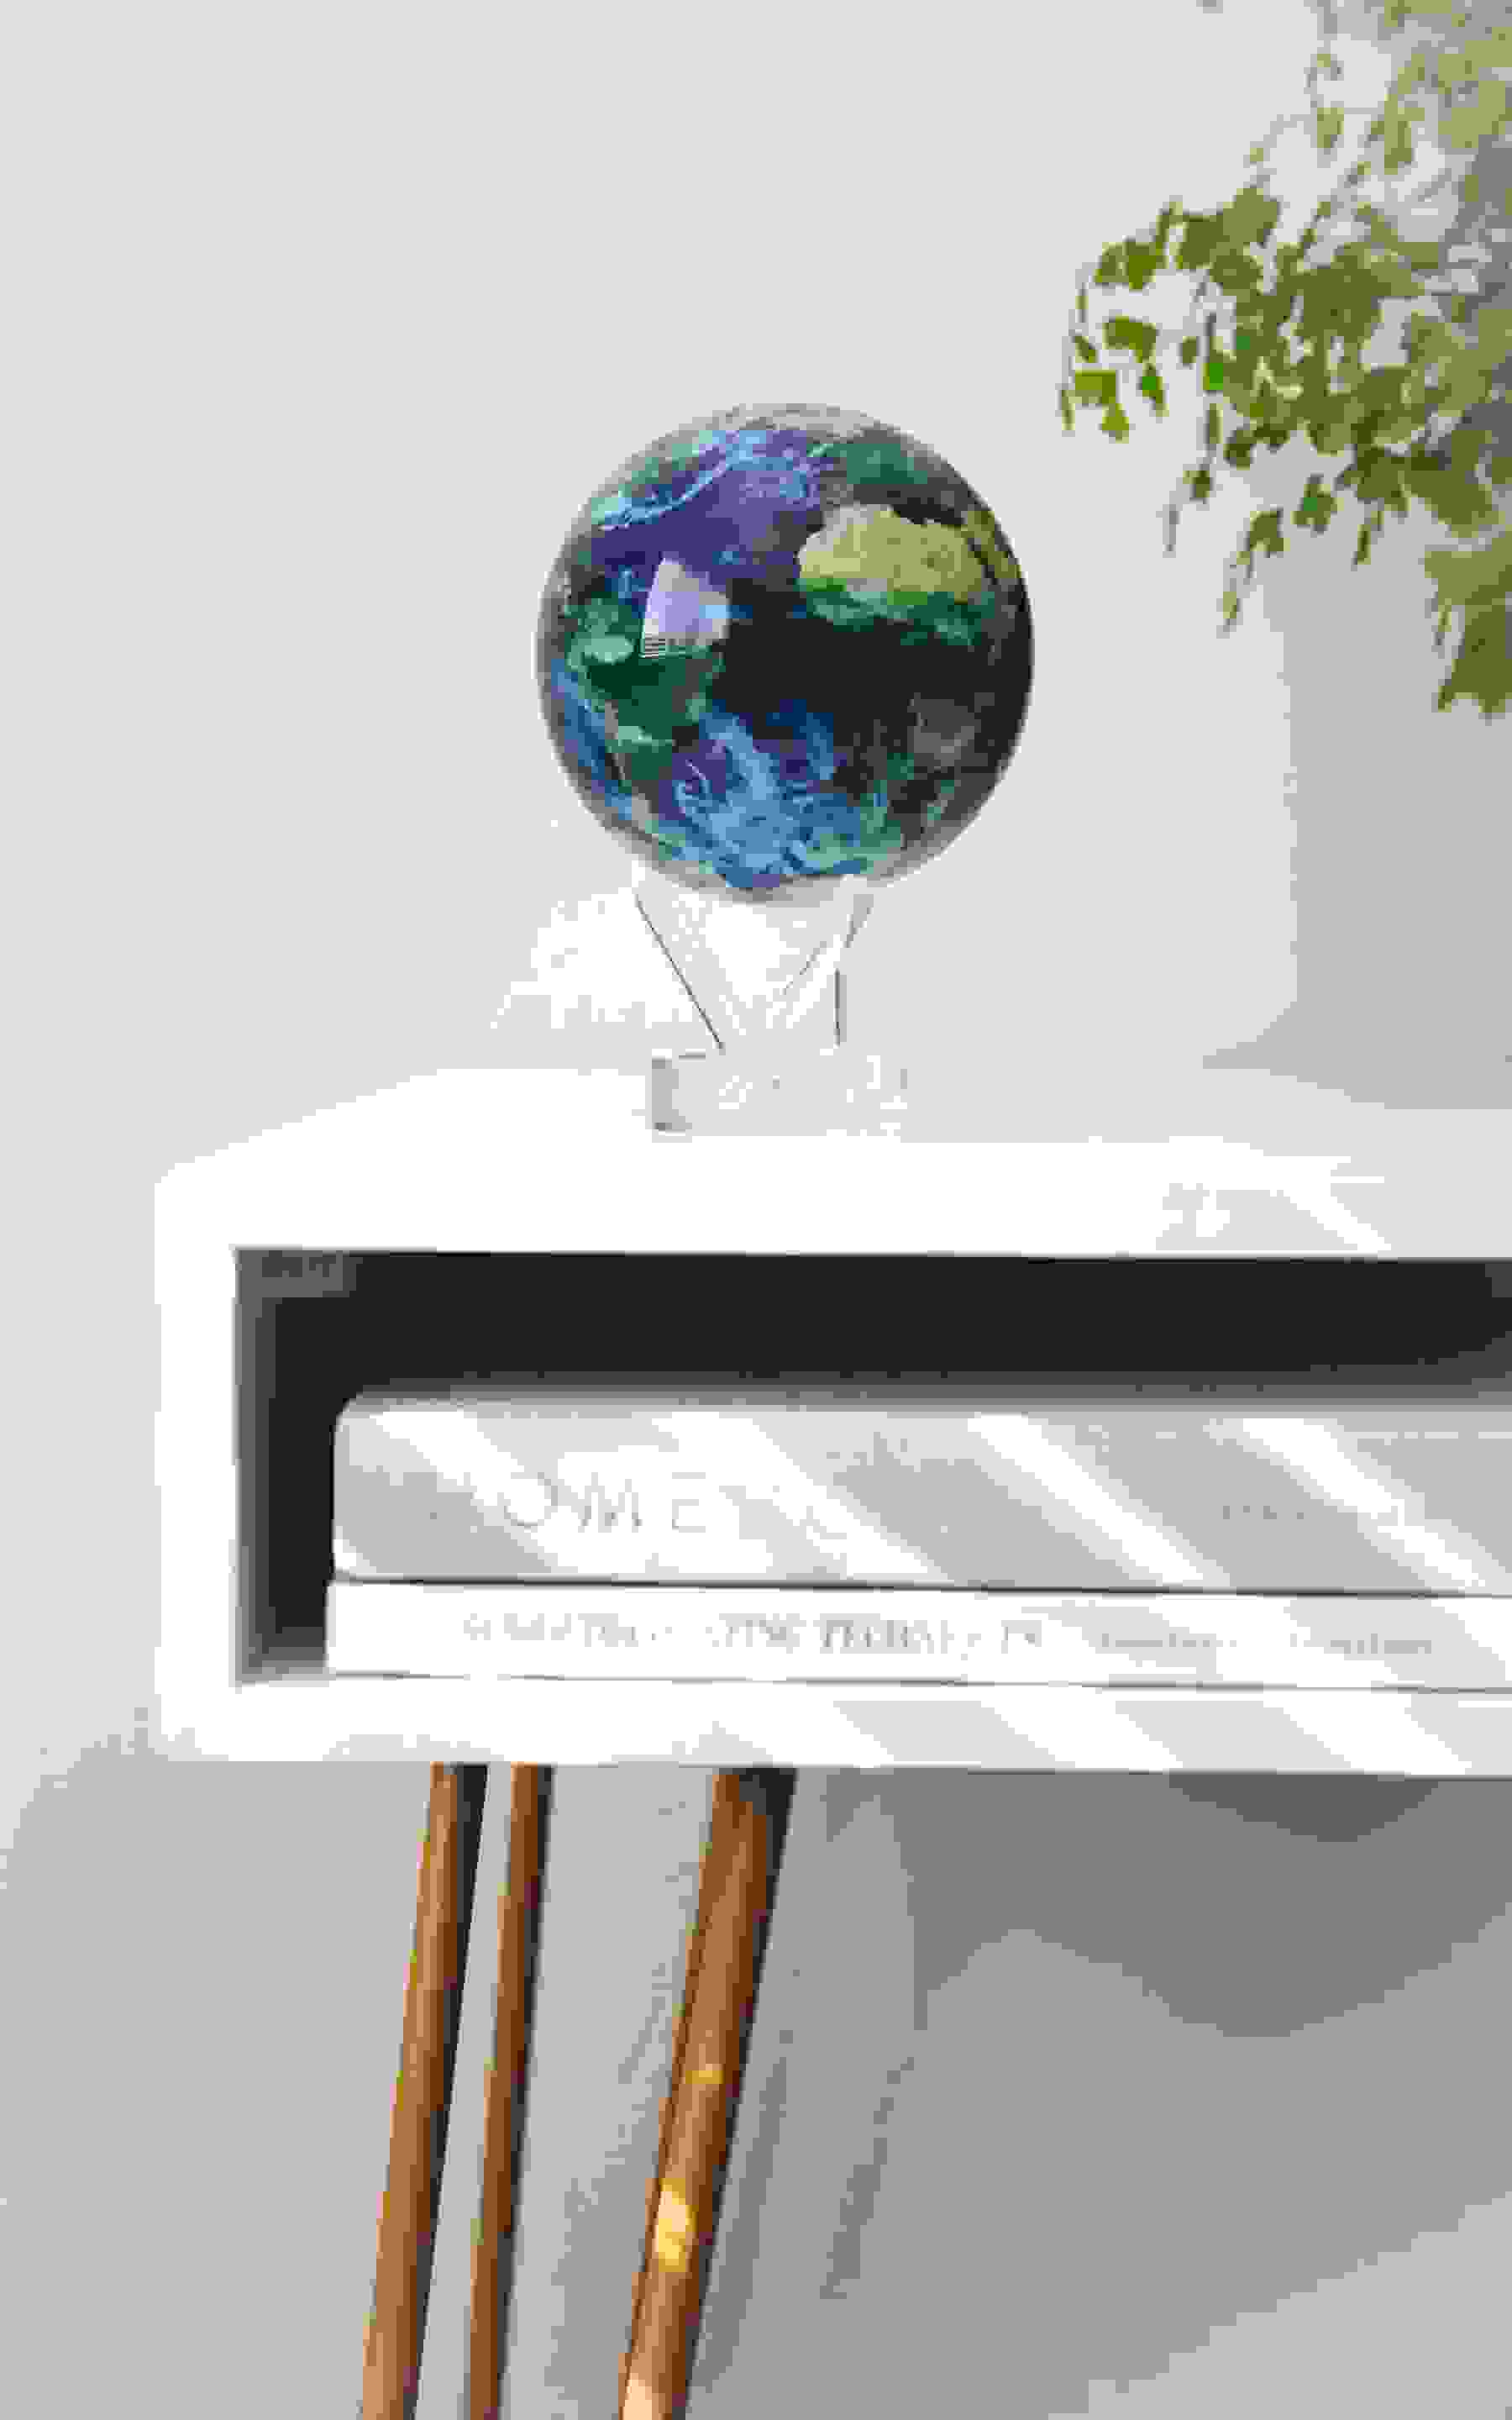 Mova Globe Earth & Clouds 6 inch w/ Acrylic Base MG-6-STE-C